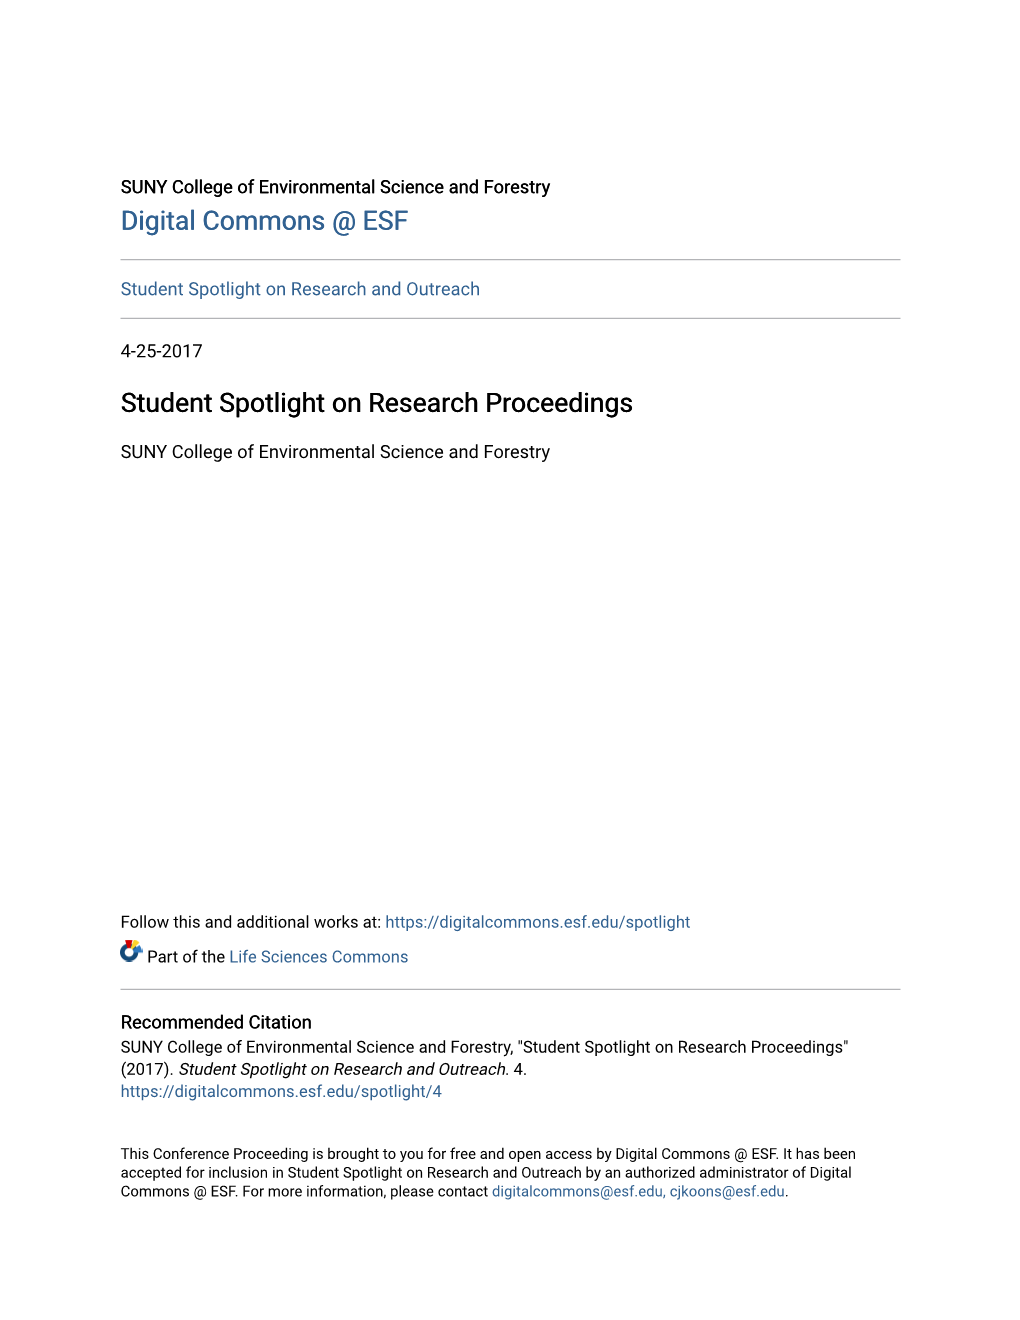 Student Spotlight on Research Proceedings